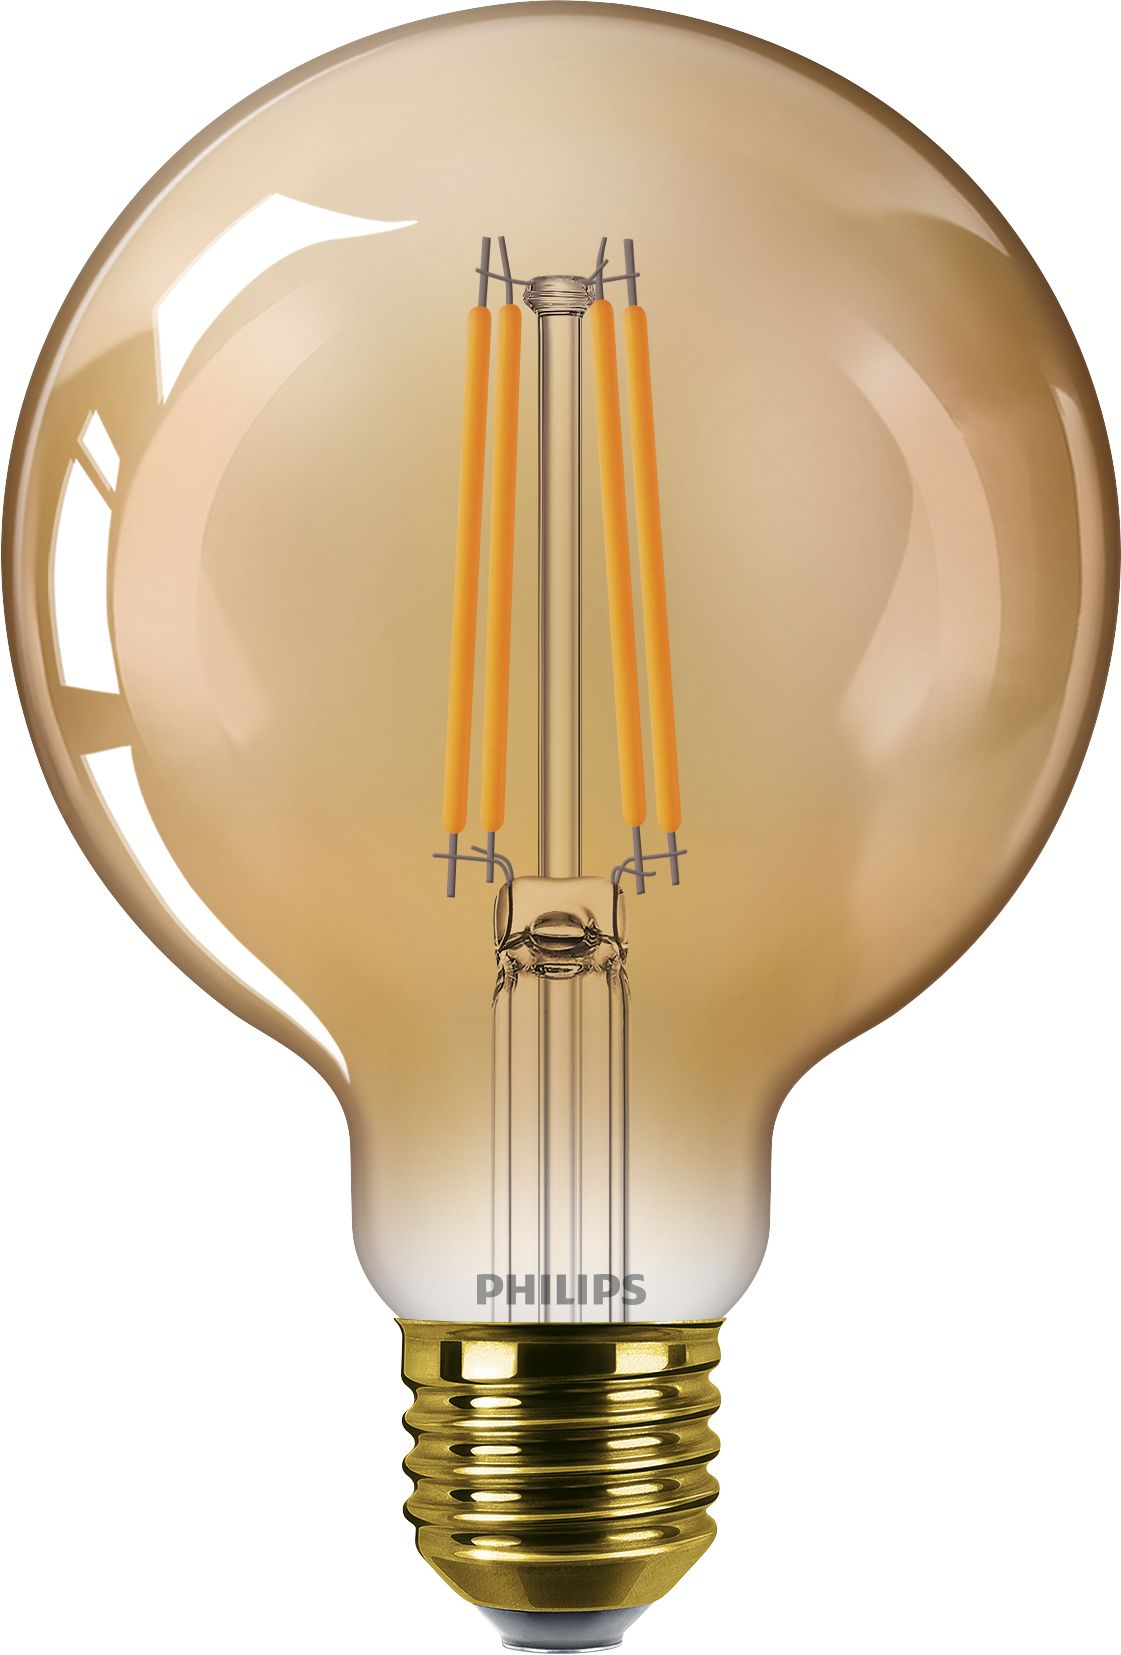 Philips LED classic Dekolampe Gold 25W E27 warmweiß Globe 53c0616c471e73df2ed377dcf7b1c67e